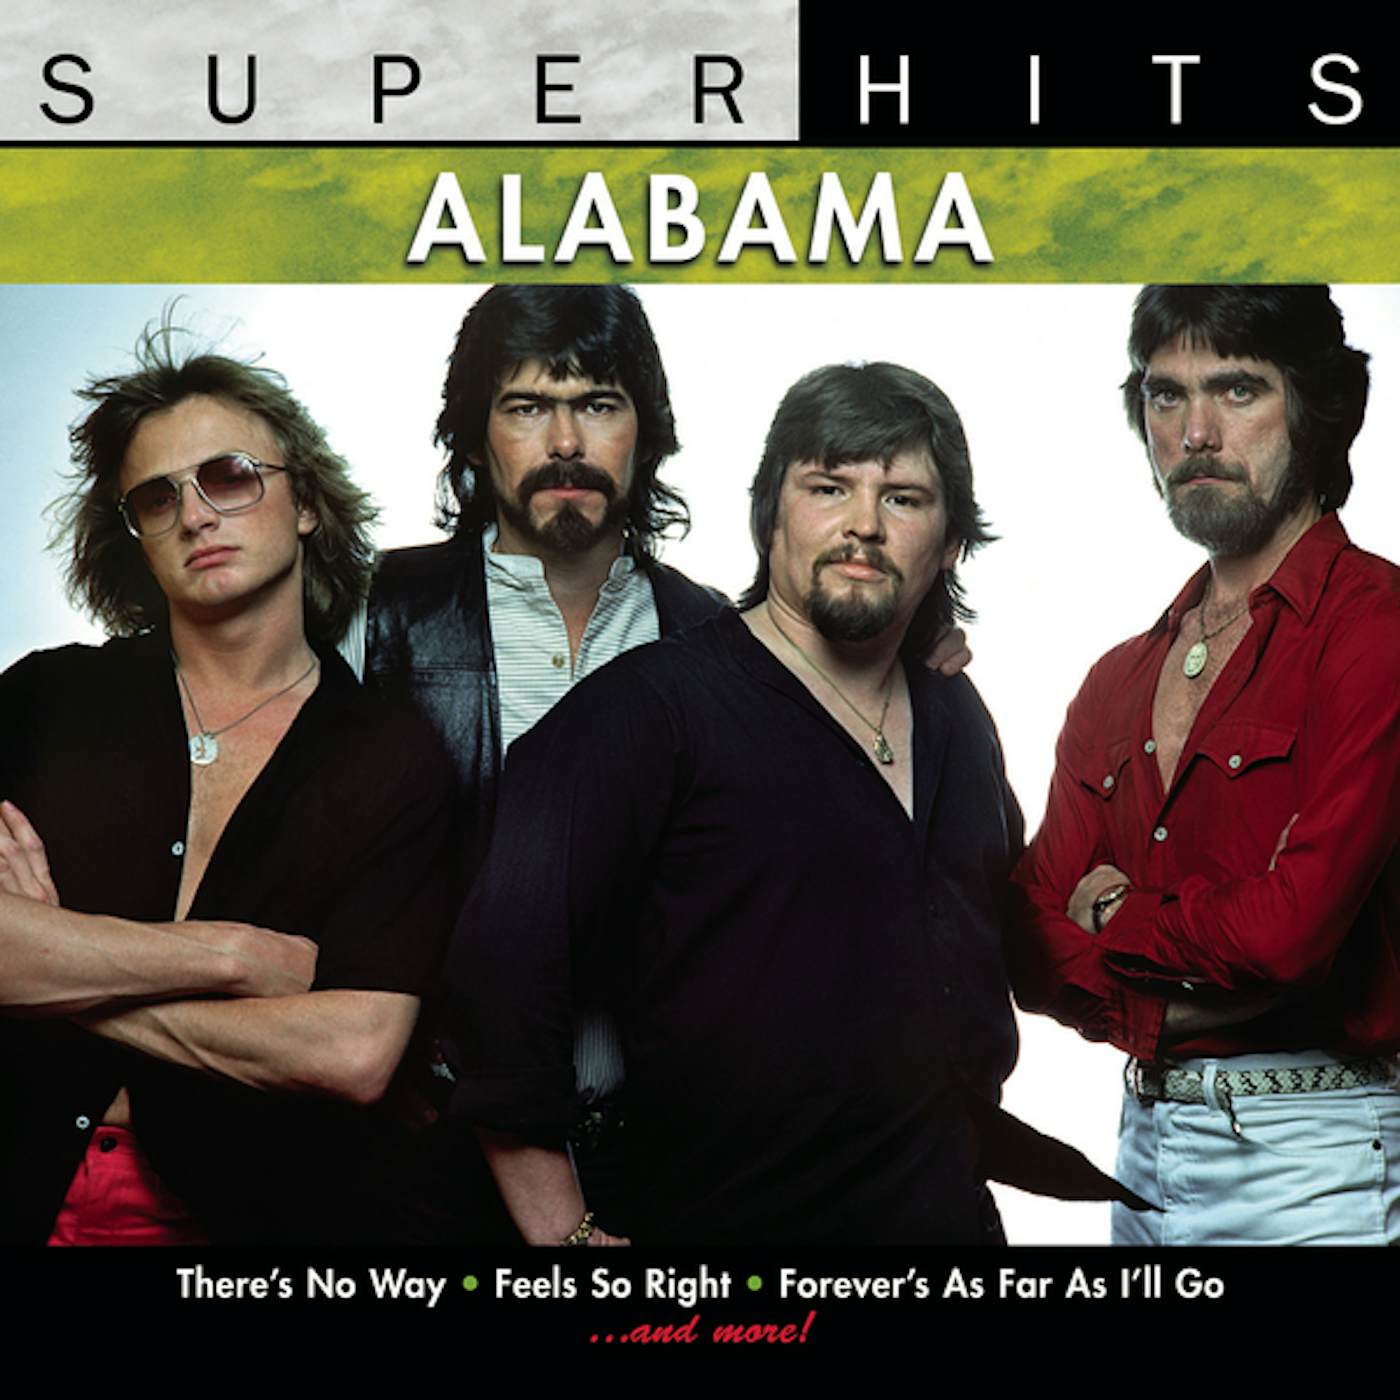 Alabama SUPER HITS CD